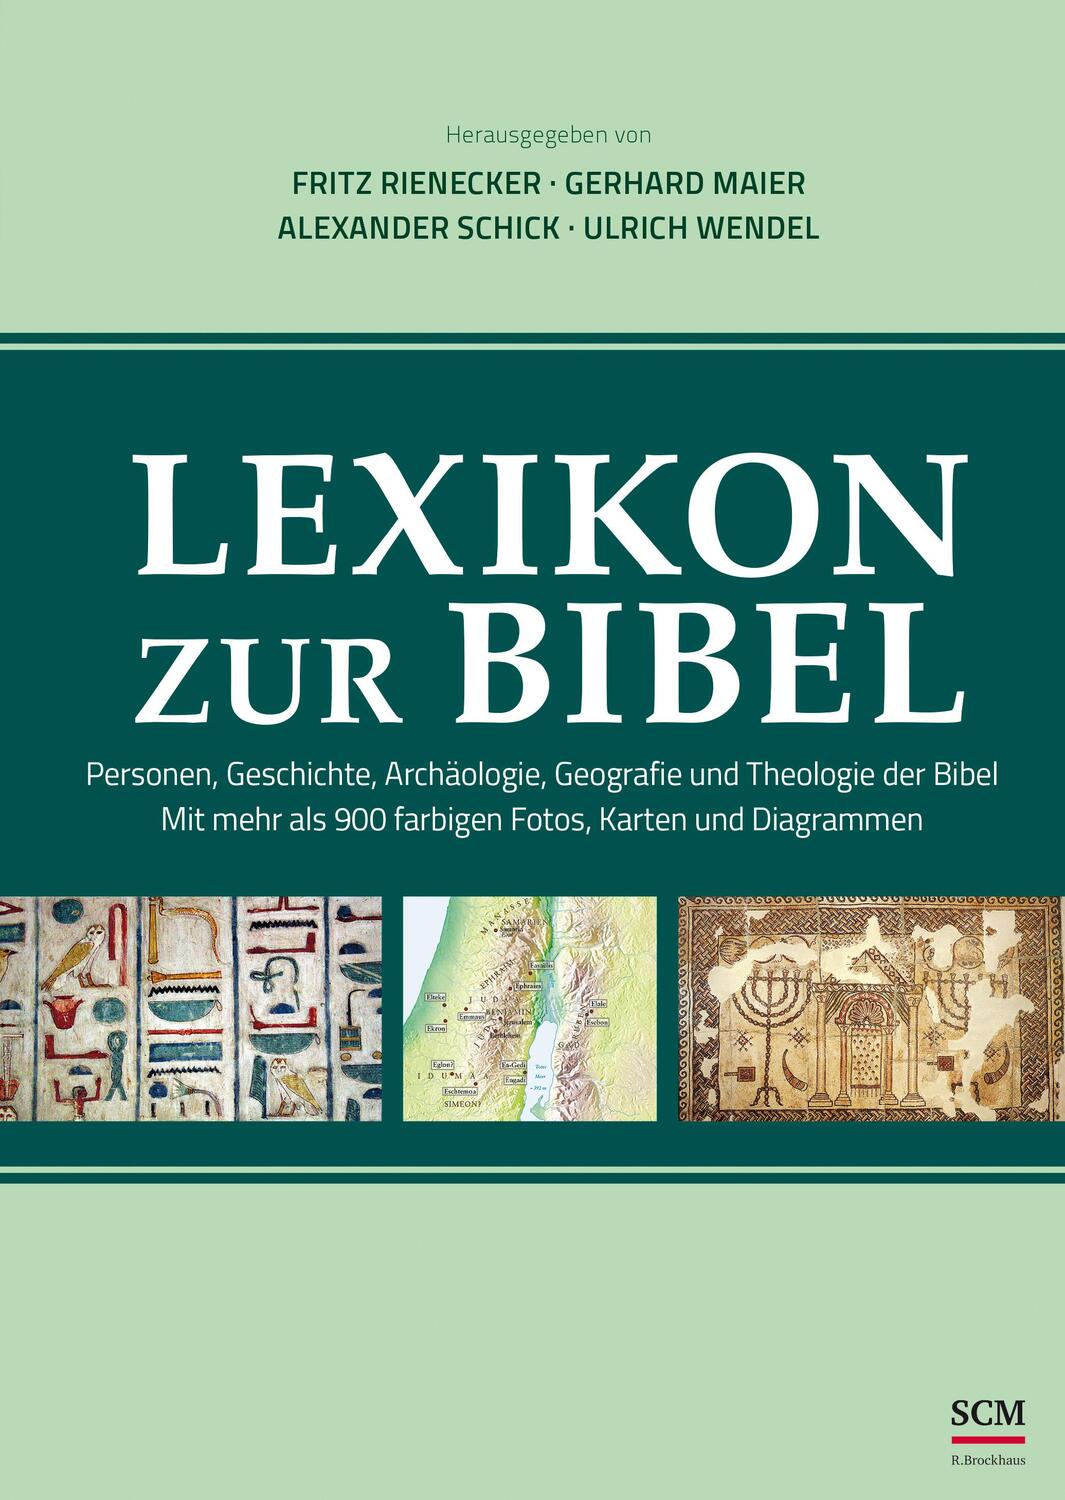 Lexikon zur Bibel - Gerhard Maier, Ulrich Wendel, Fritz Rienecker